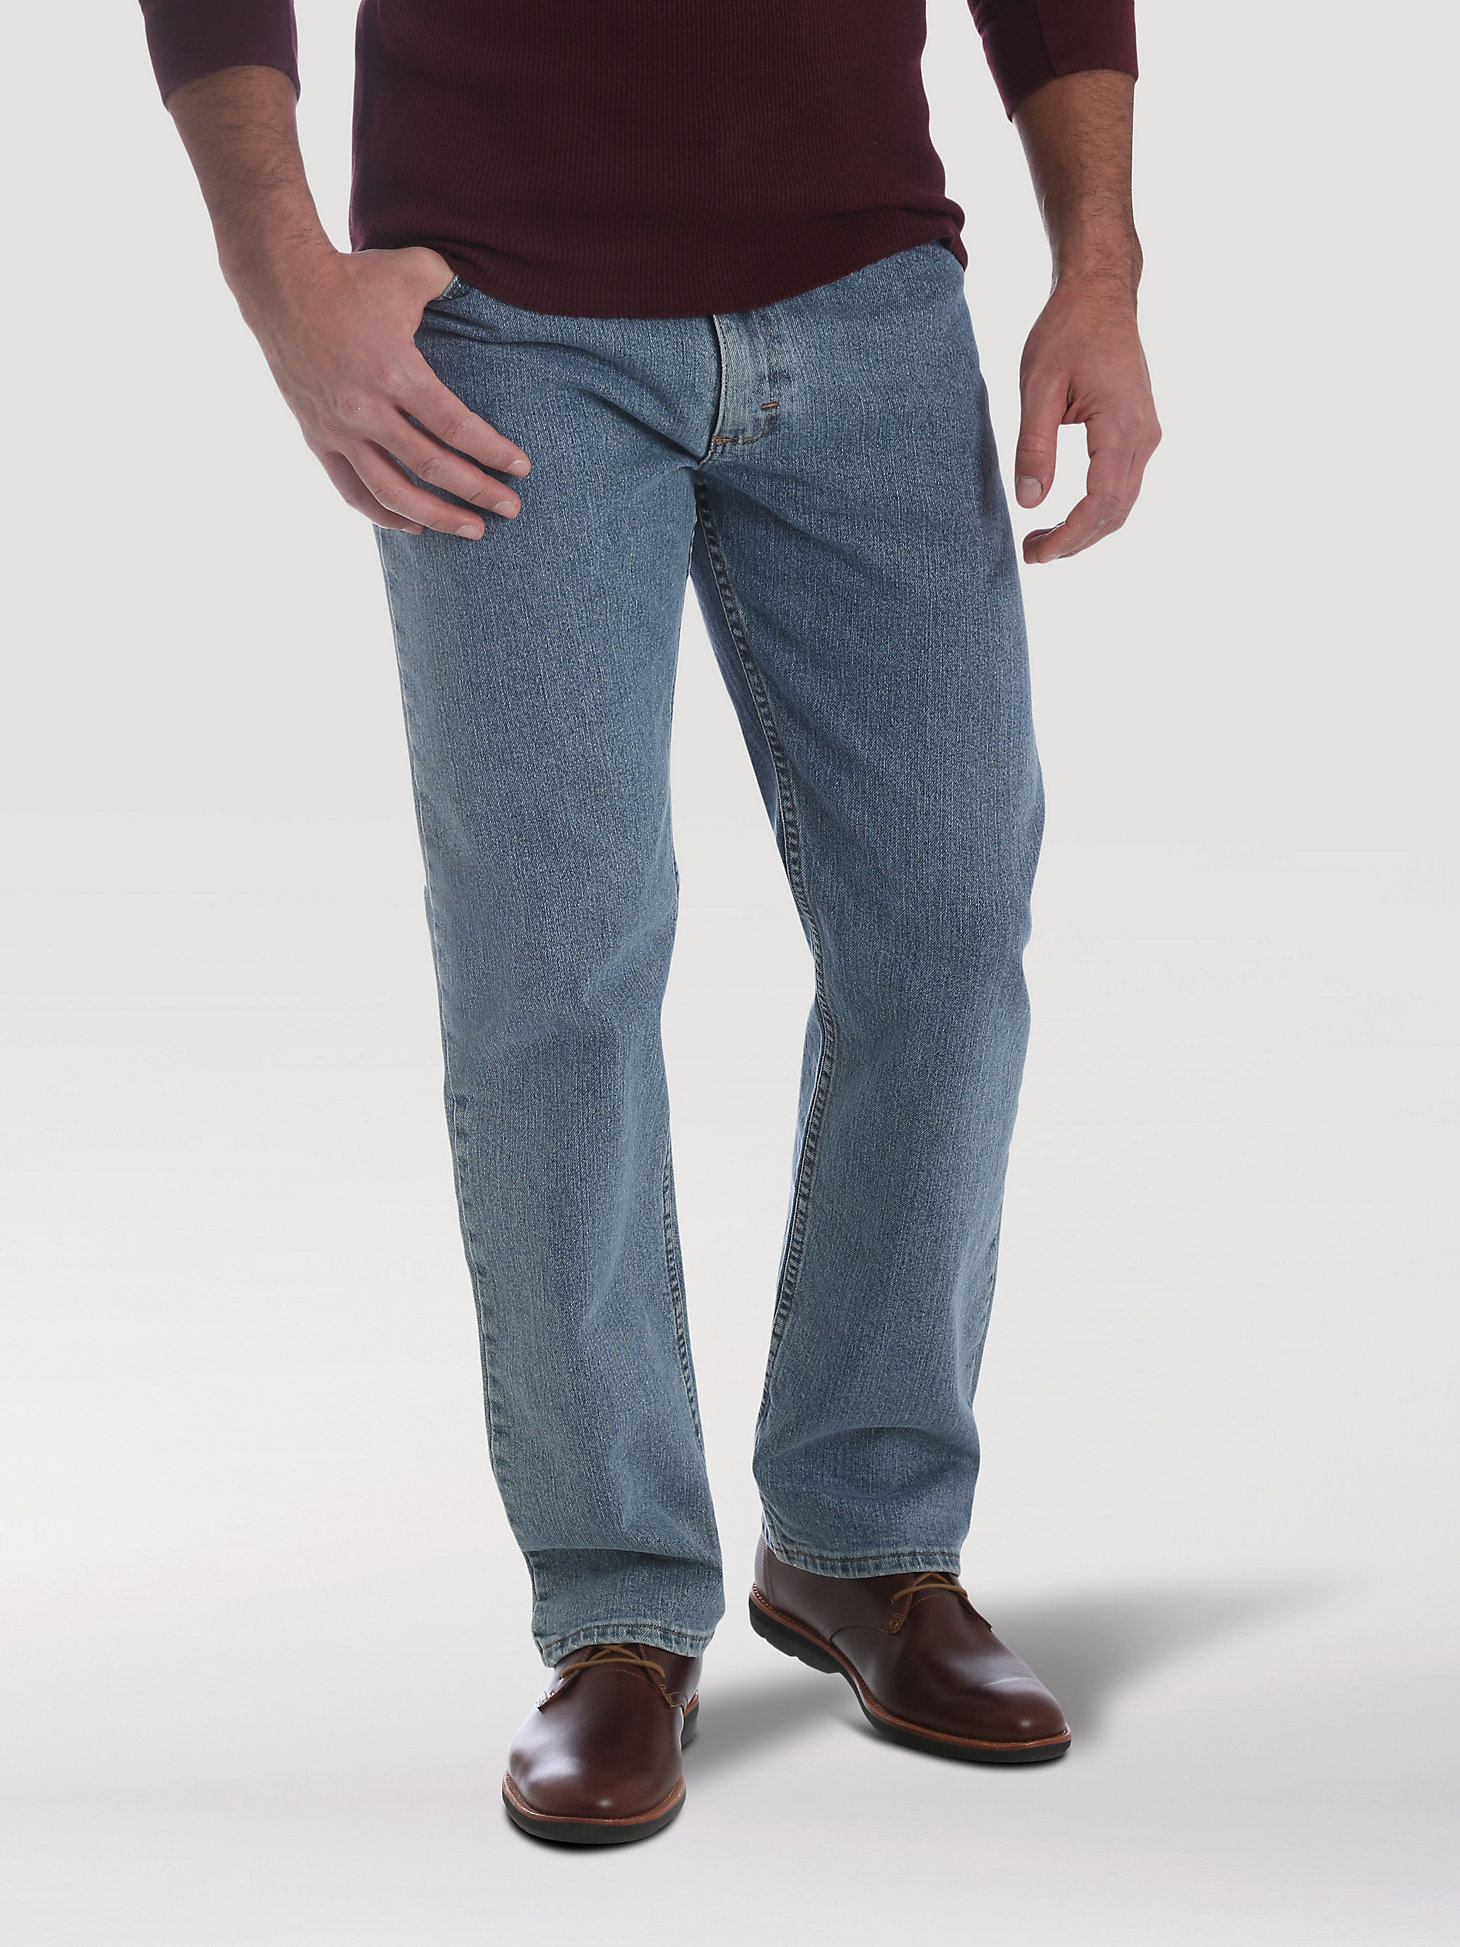 Wrangler® Five Star Premium Performance Series Regular Fit Jean in Light Wash main view